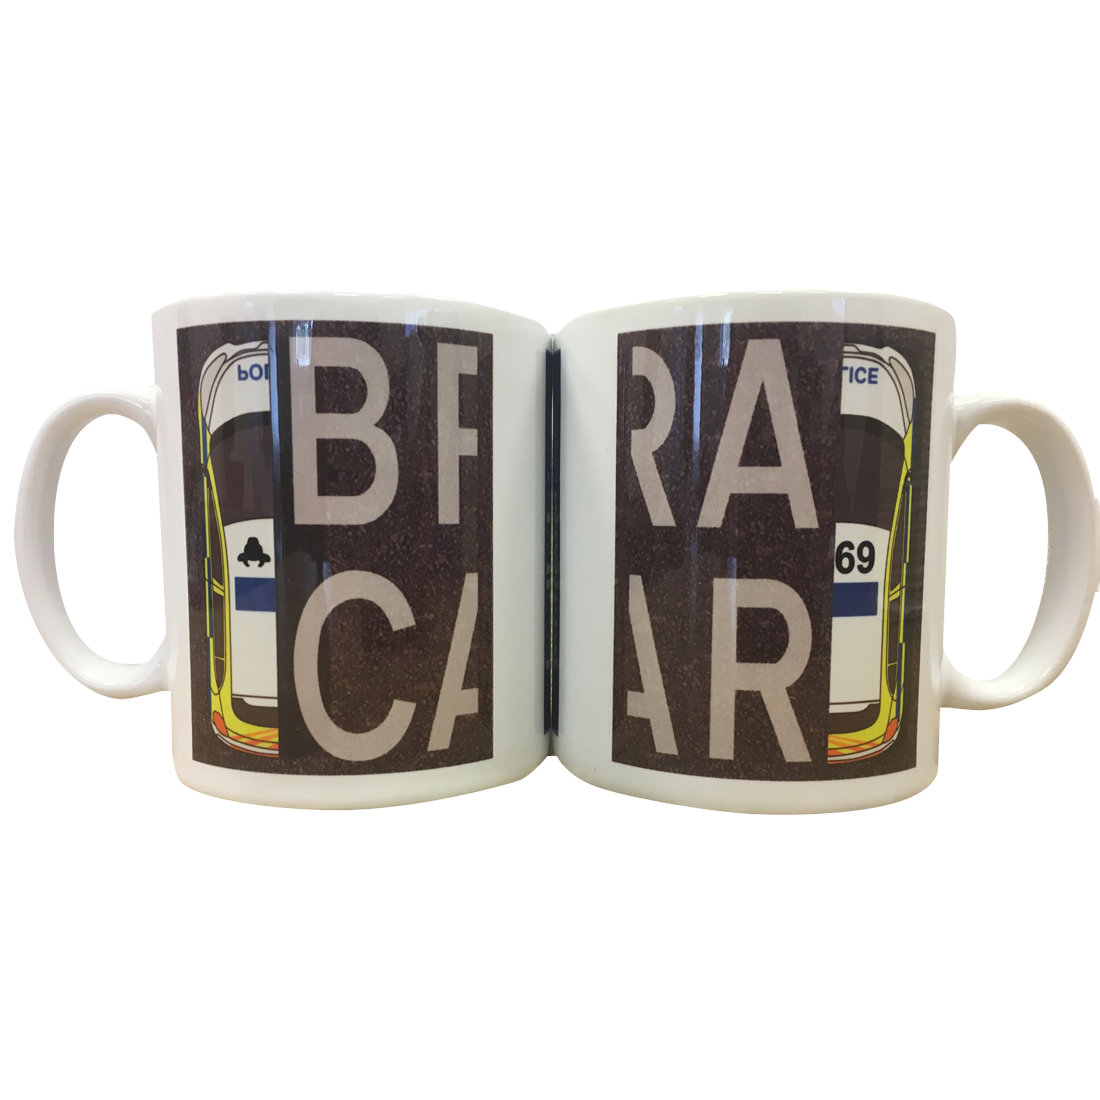 TWO Personalised 'Bra Car' Drinking Vessels